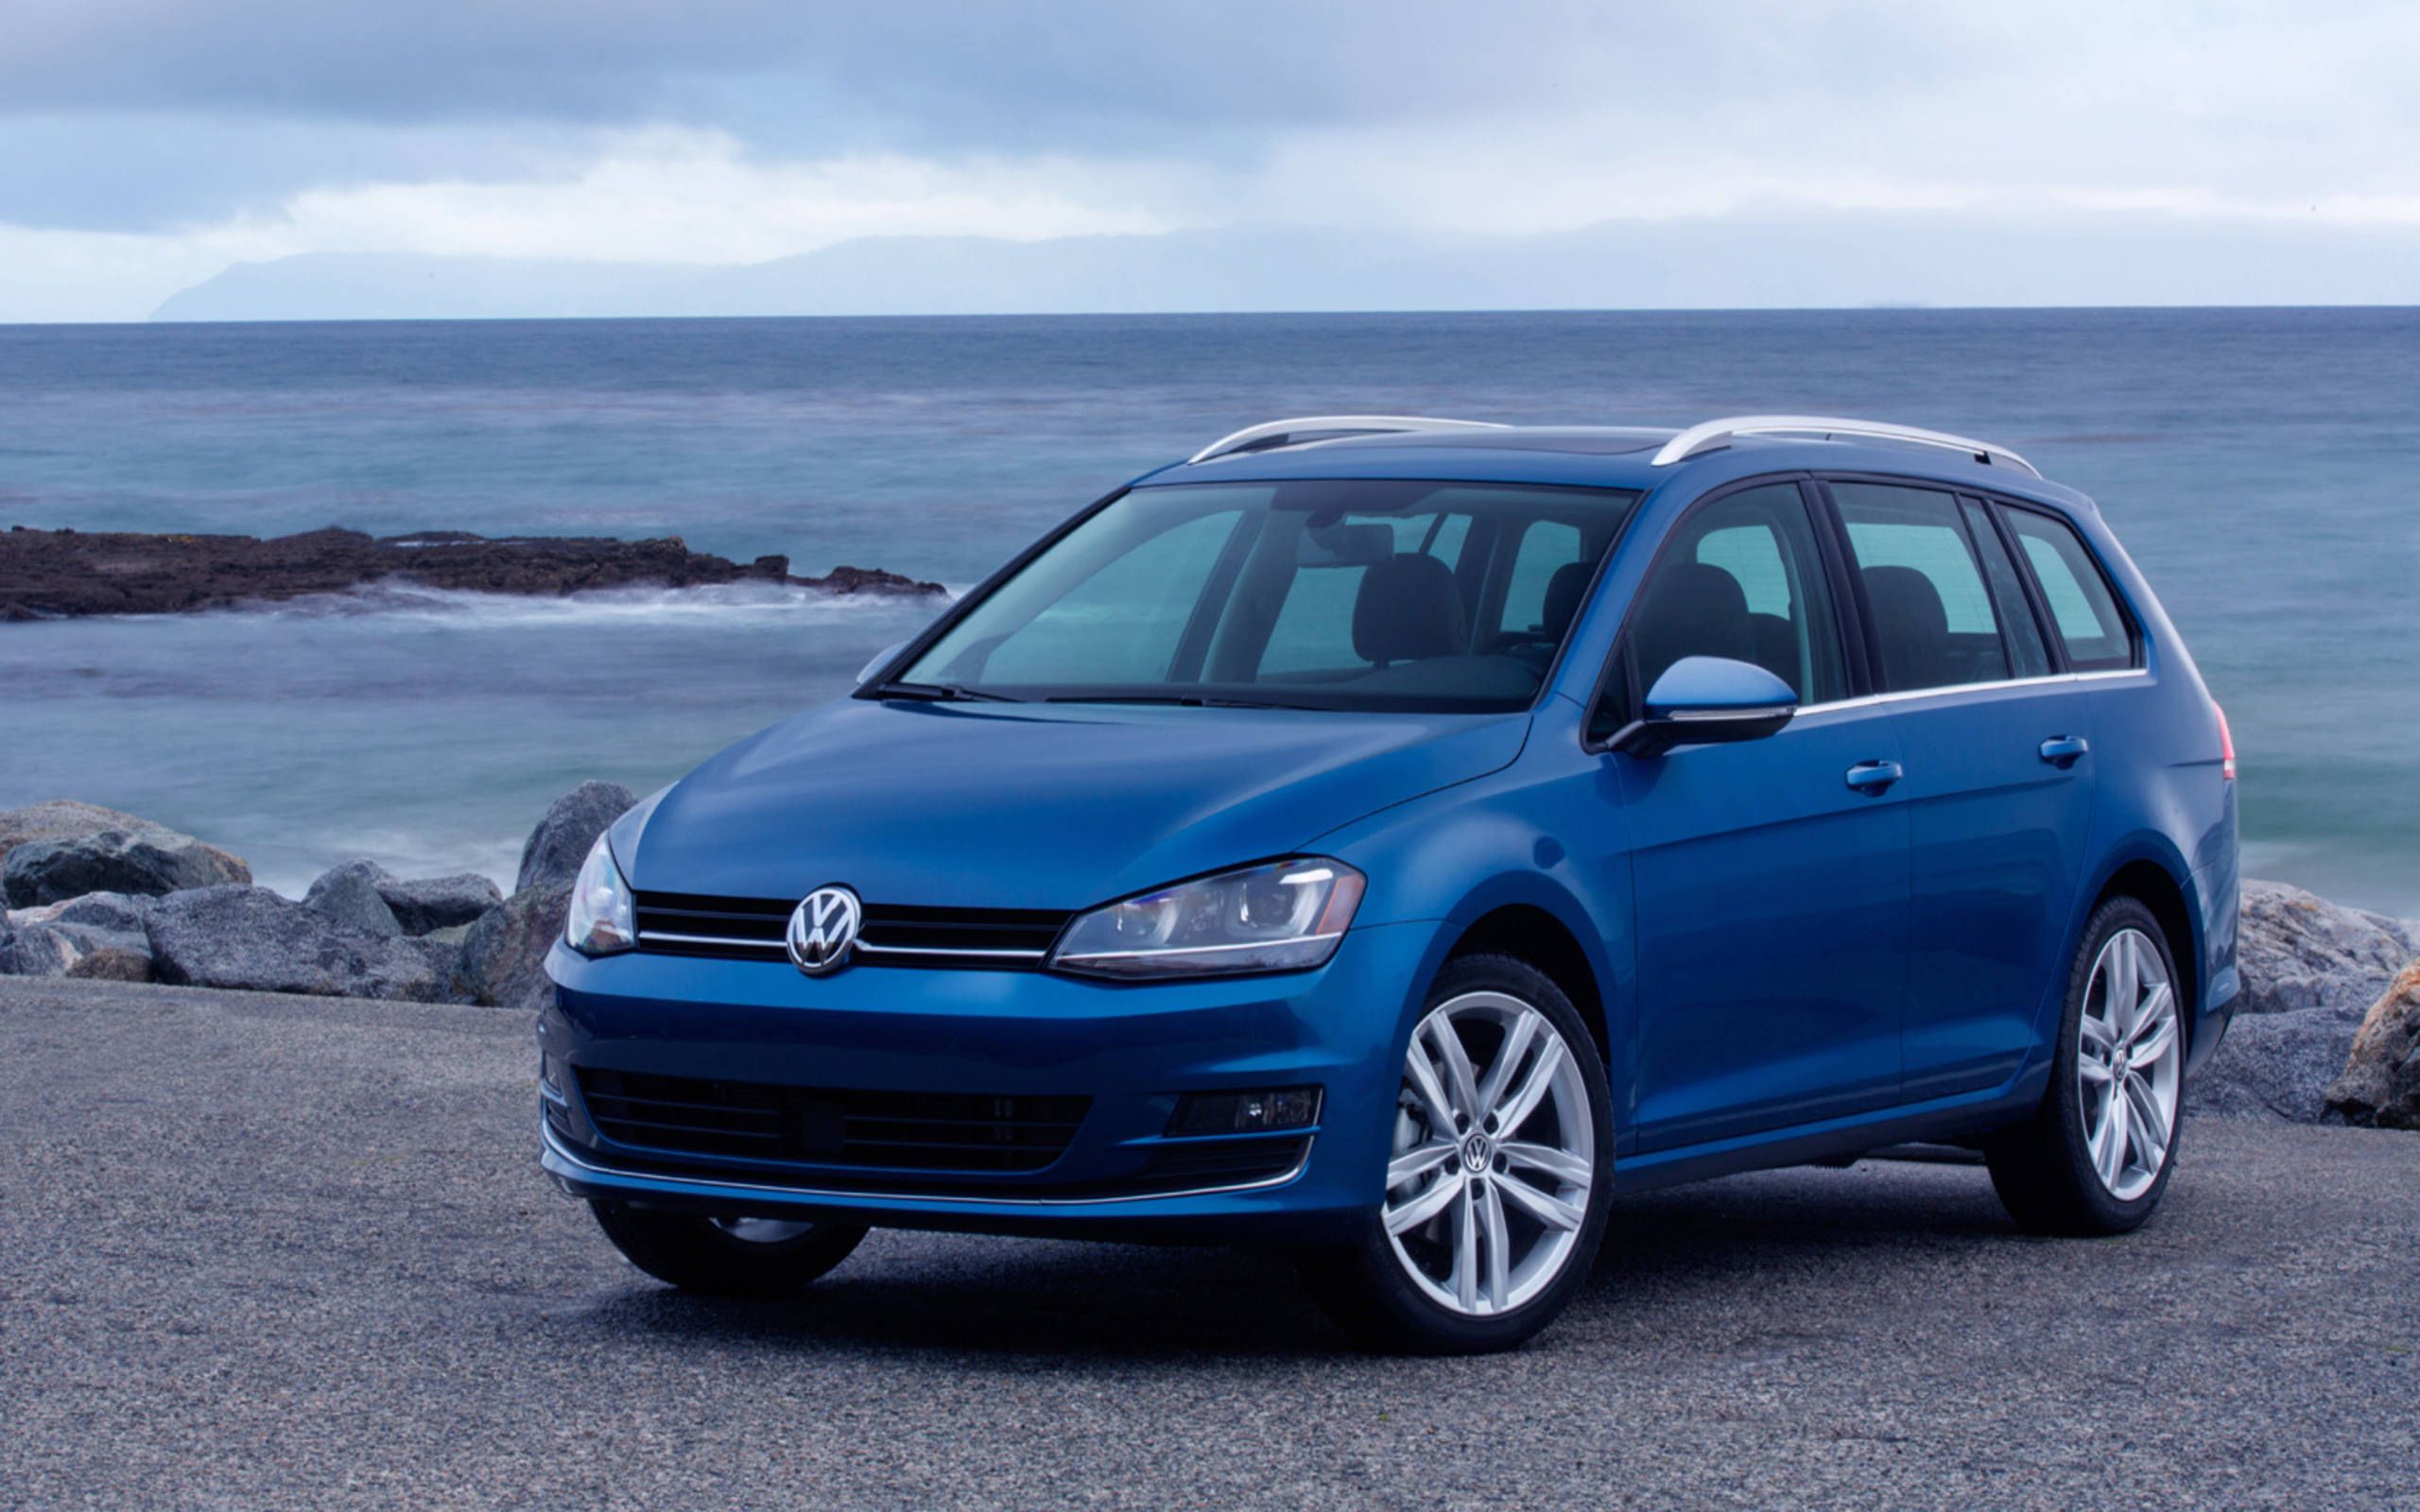 2015 Volkswagen Golf SportWagen TDI SEL review notes: the auto